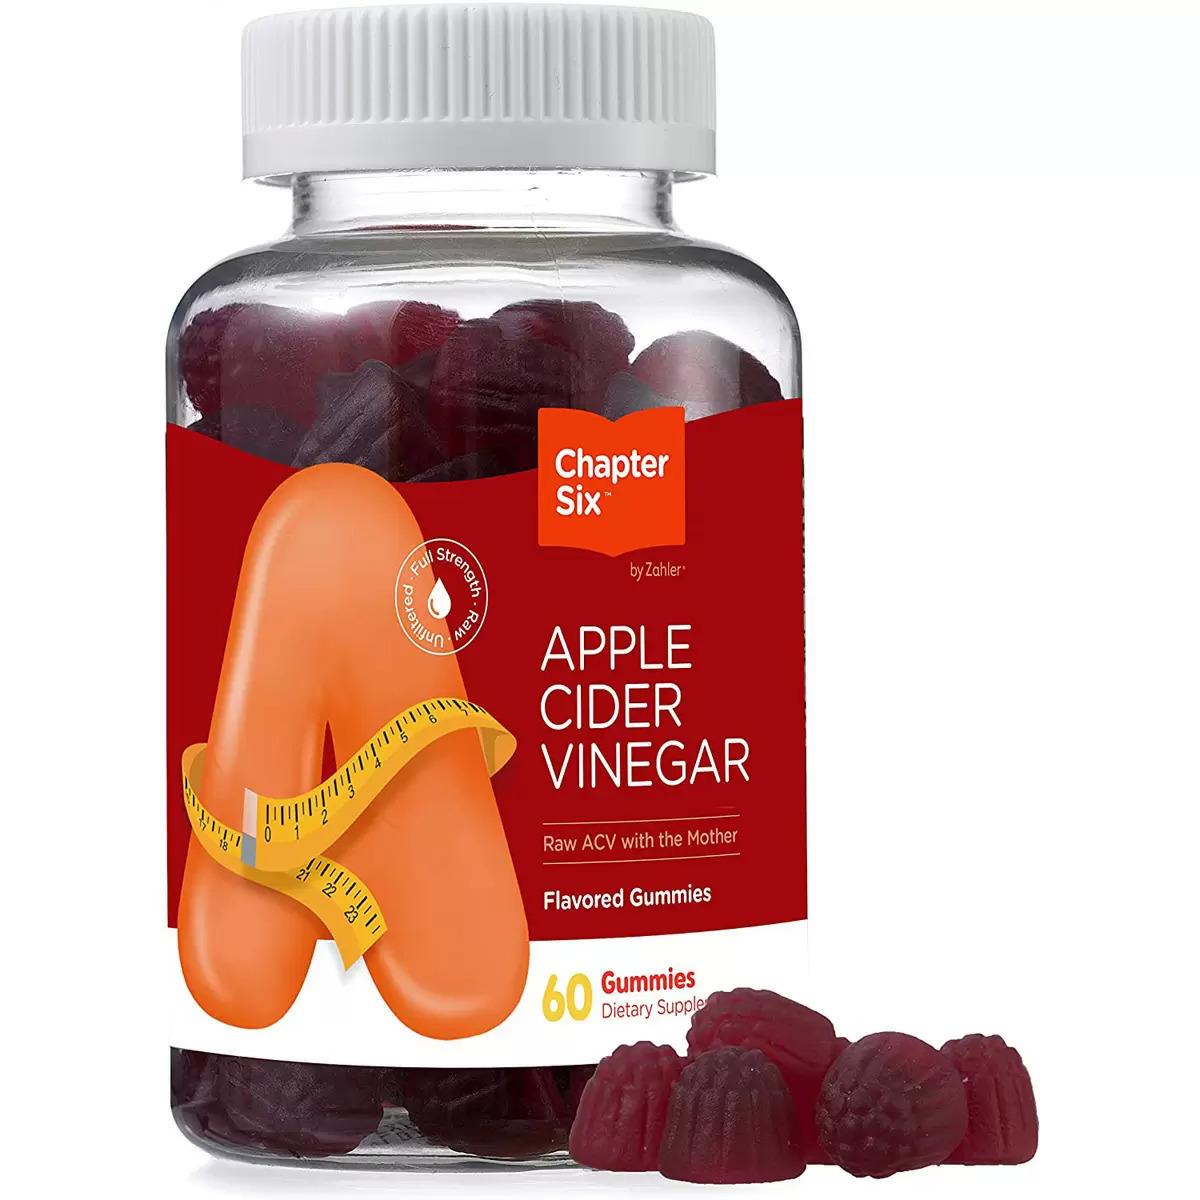 Chapter Six Apple Cider Vinegar Gummies 60 Pack for $4.47 Shipped